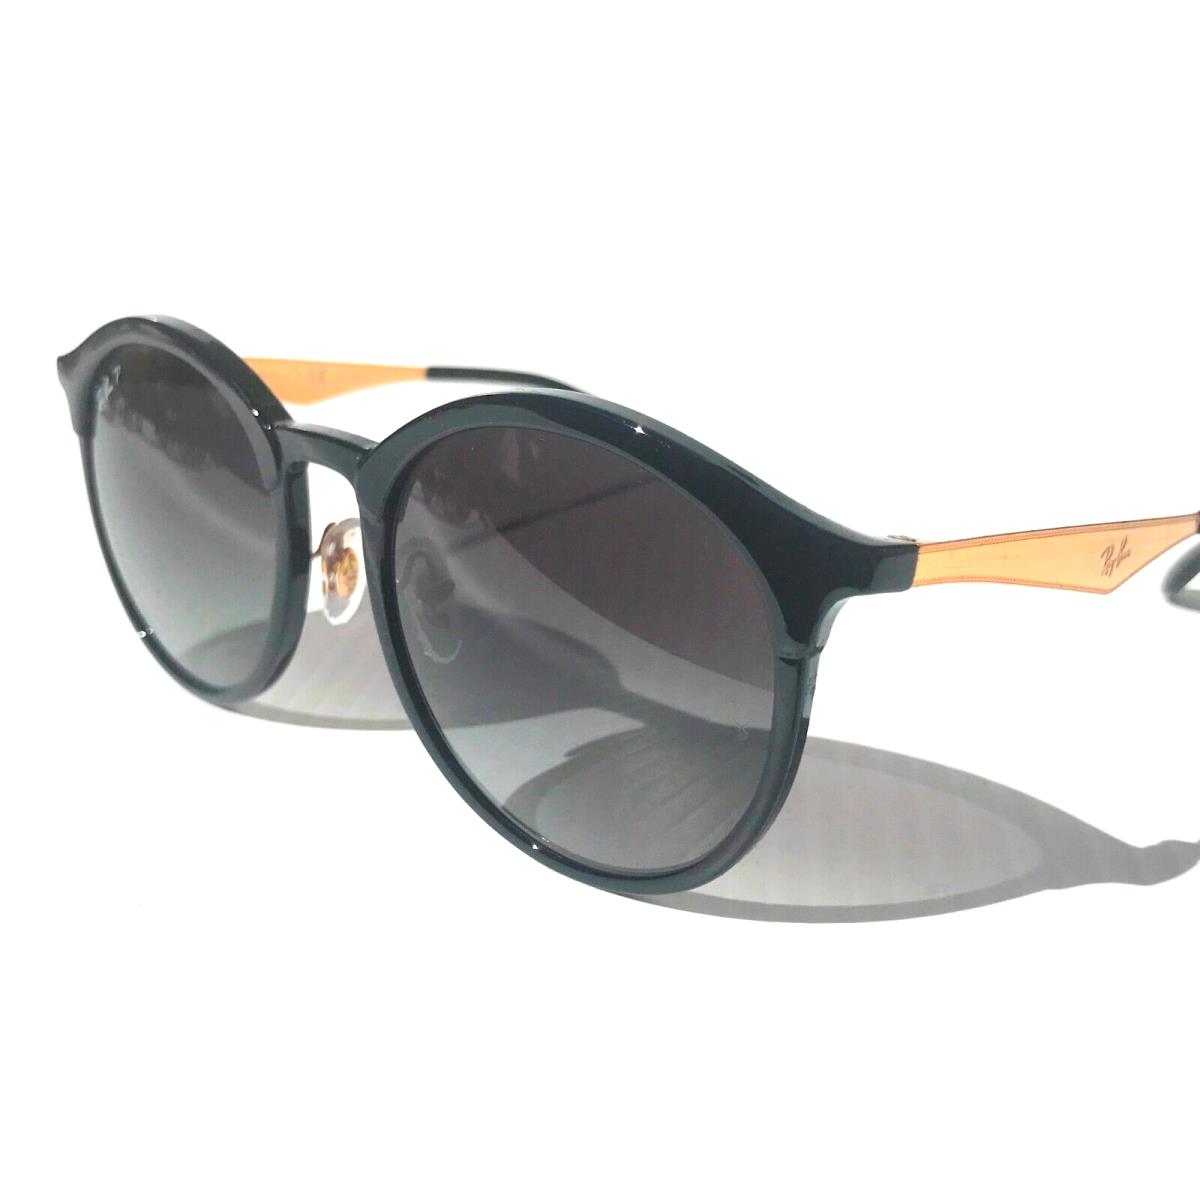 Ray-Ban sunglasses Emma - Frame: Black and Gold, Lens: Grey 5